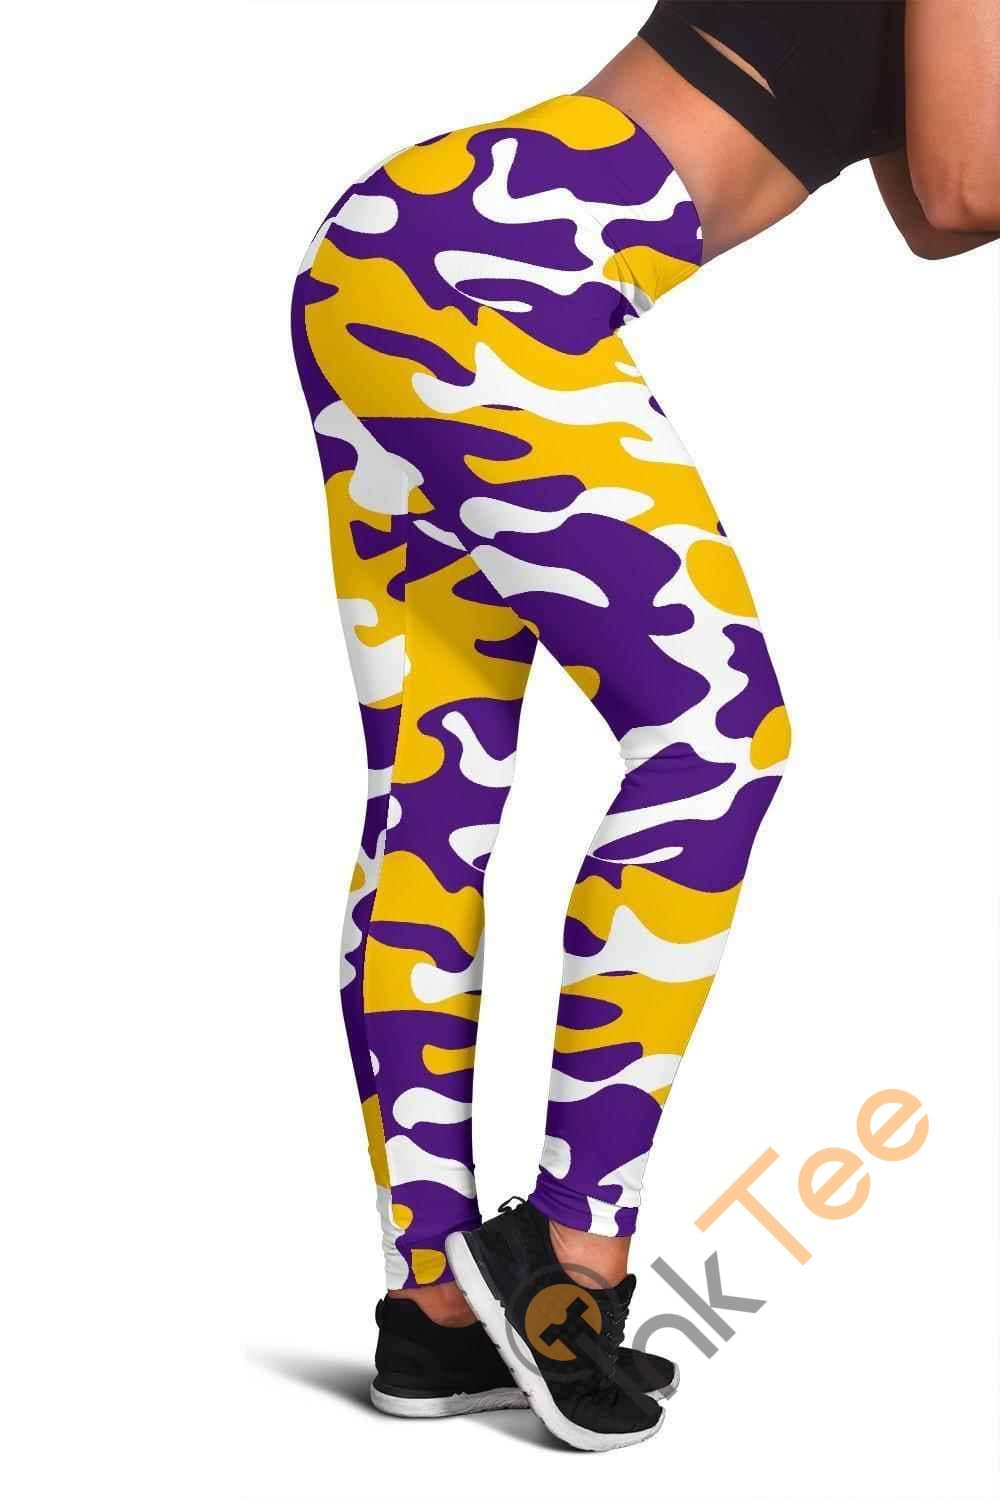 Inktee Store - Minnesota Vikings Inspired Tru Camo 3D All Over Print For Yoga Fitness Fashion Women'S Leggings Image